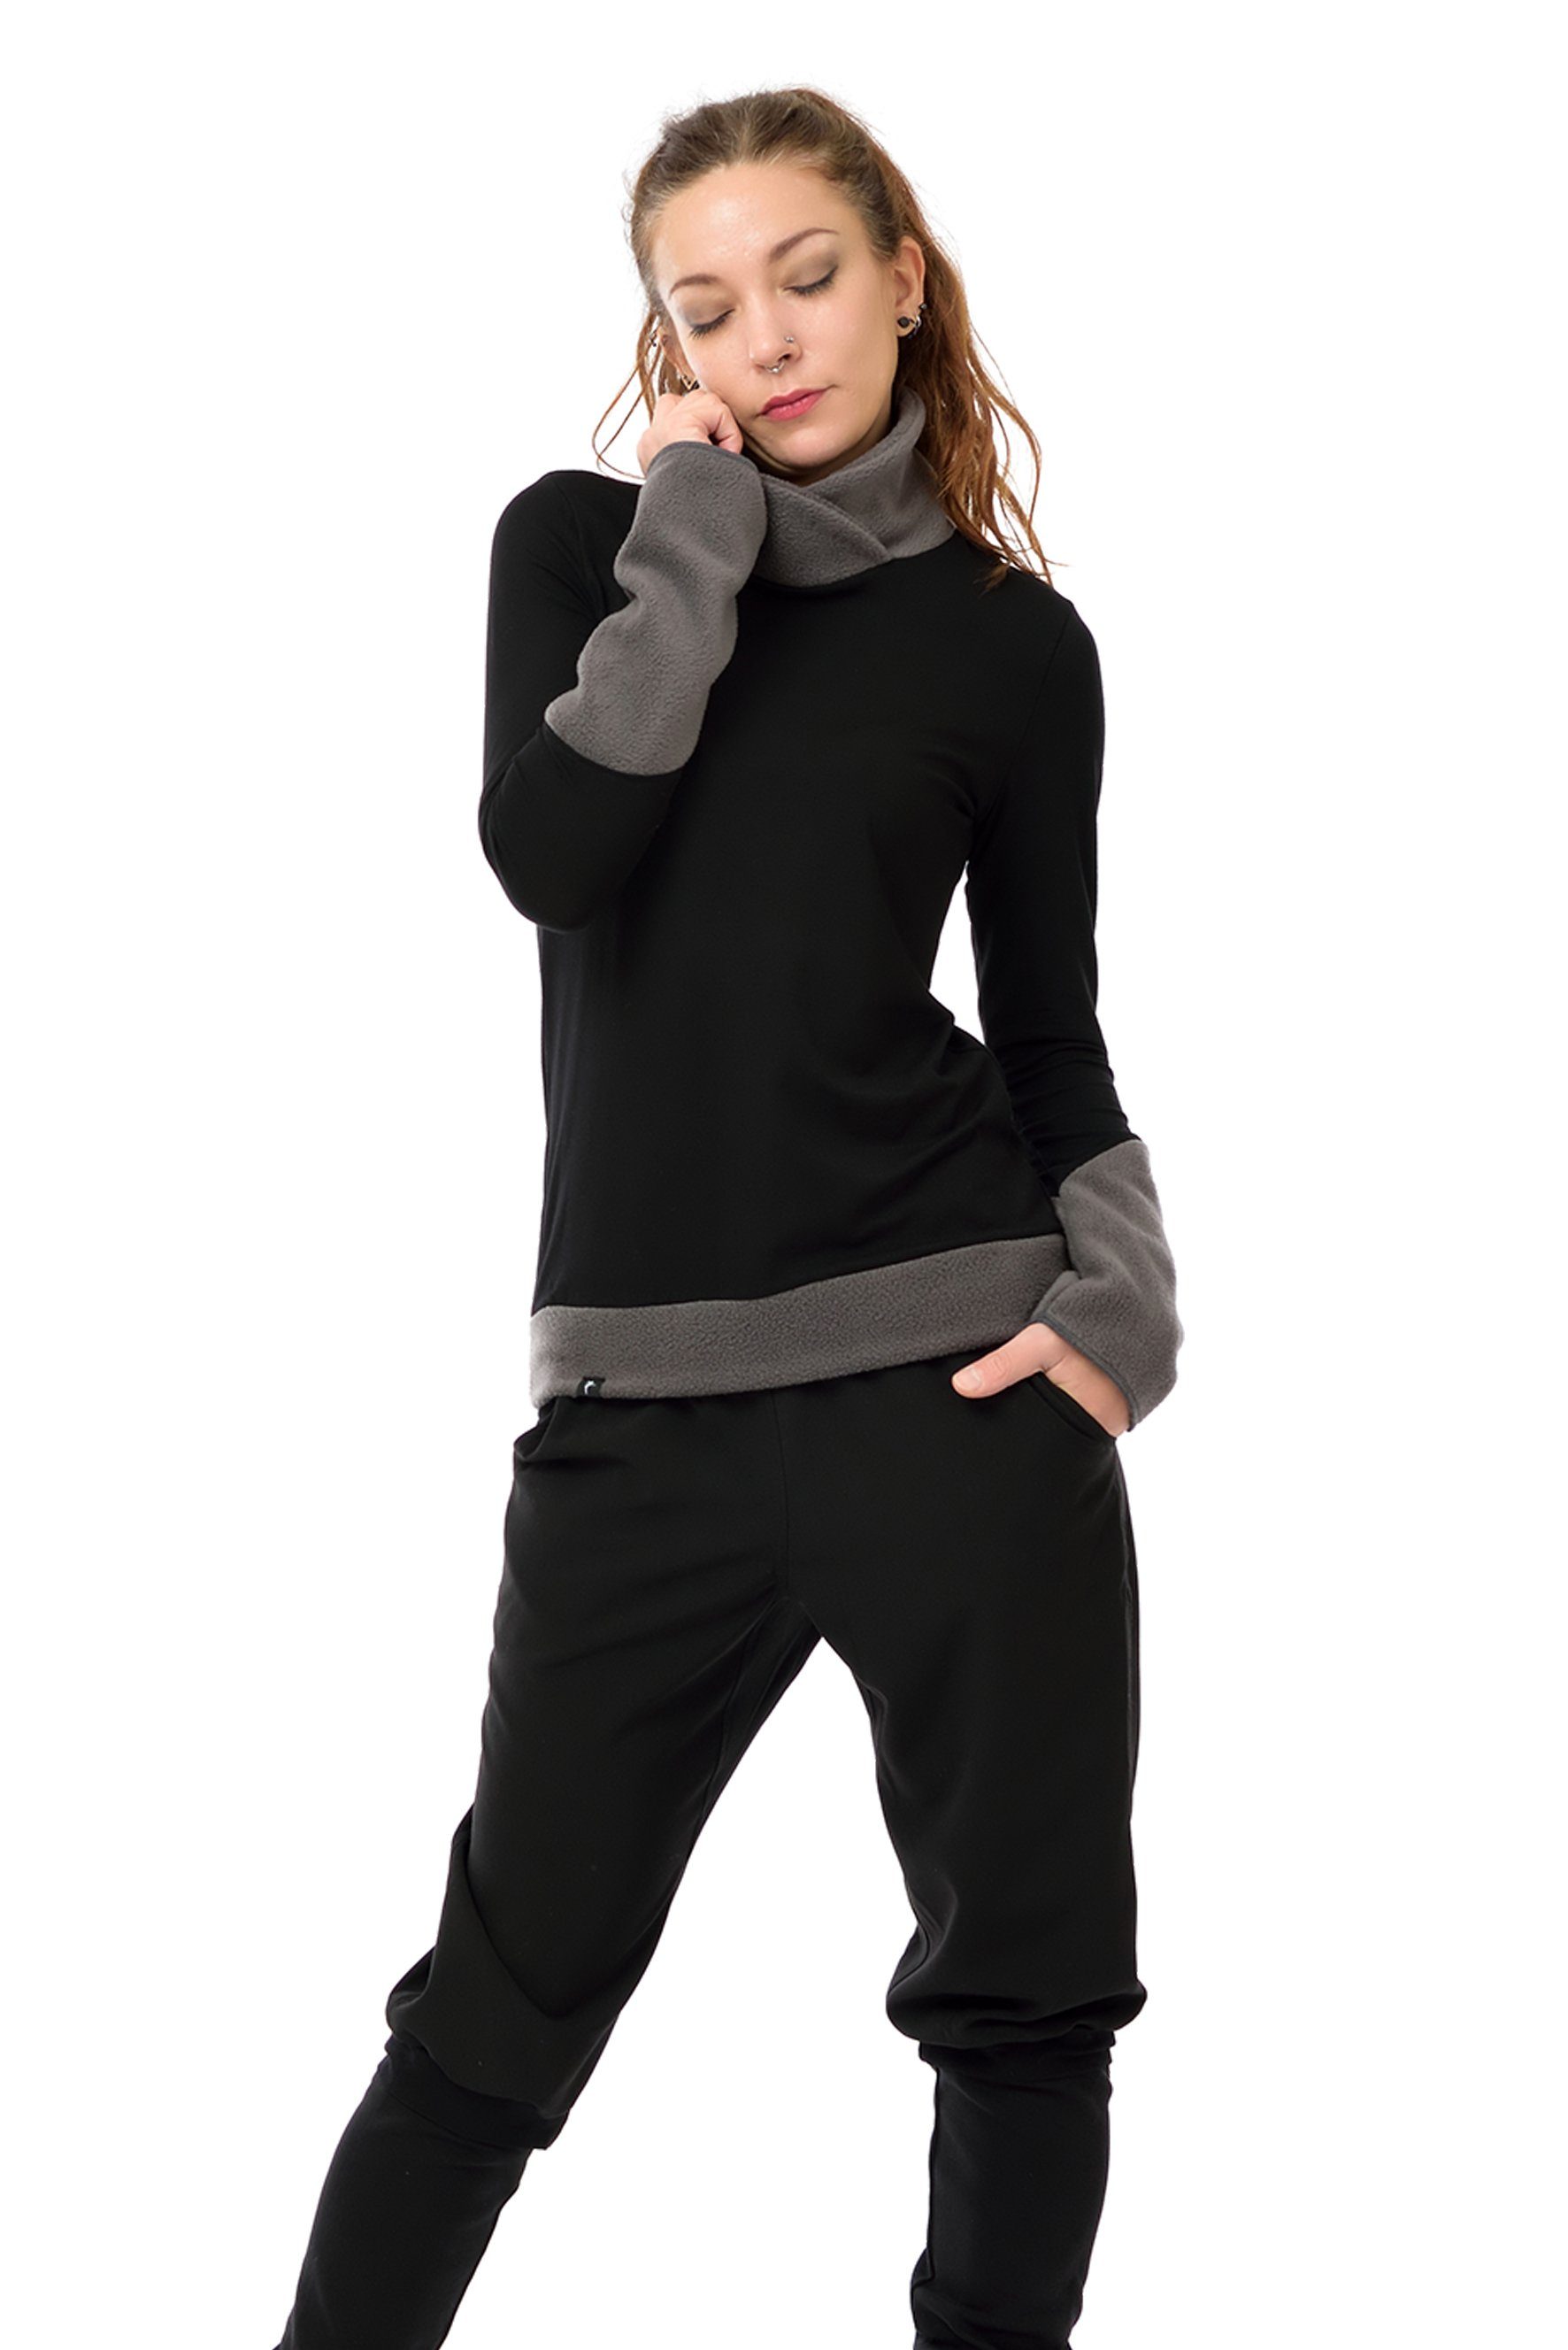 3Elfen Rollkragenpullover Winter Sweatshirt schwarz mit Rollkragen Grau Fleece